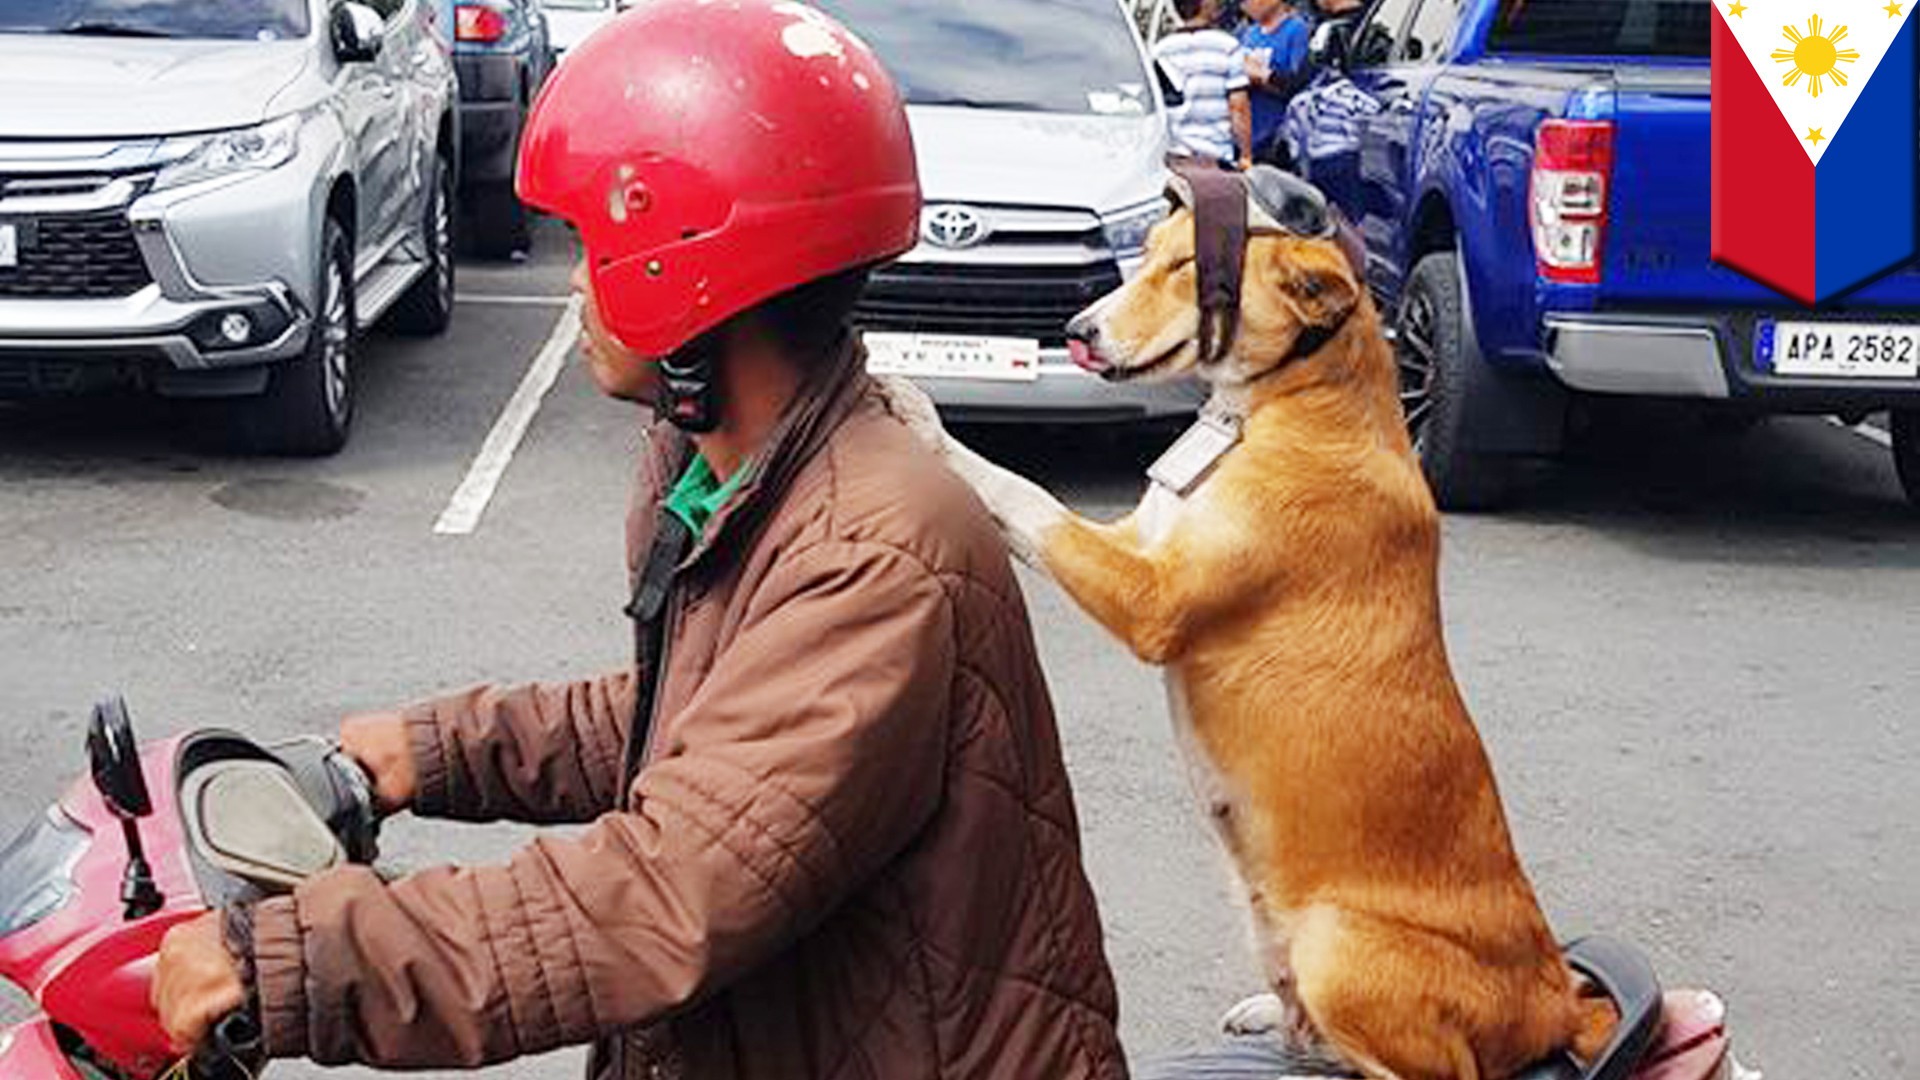 Streaming Video Anjing Lucu Naik Motor Pake Helm Tomonews Vidiocom